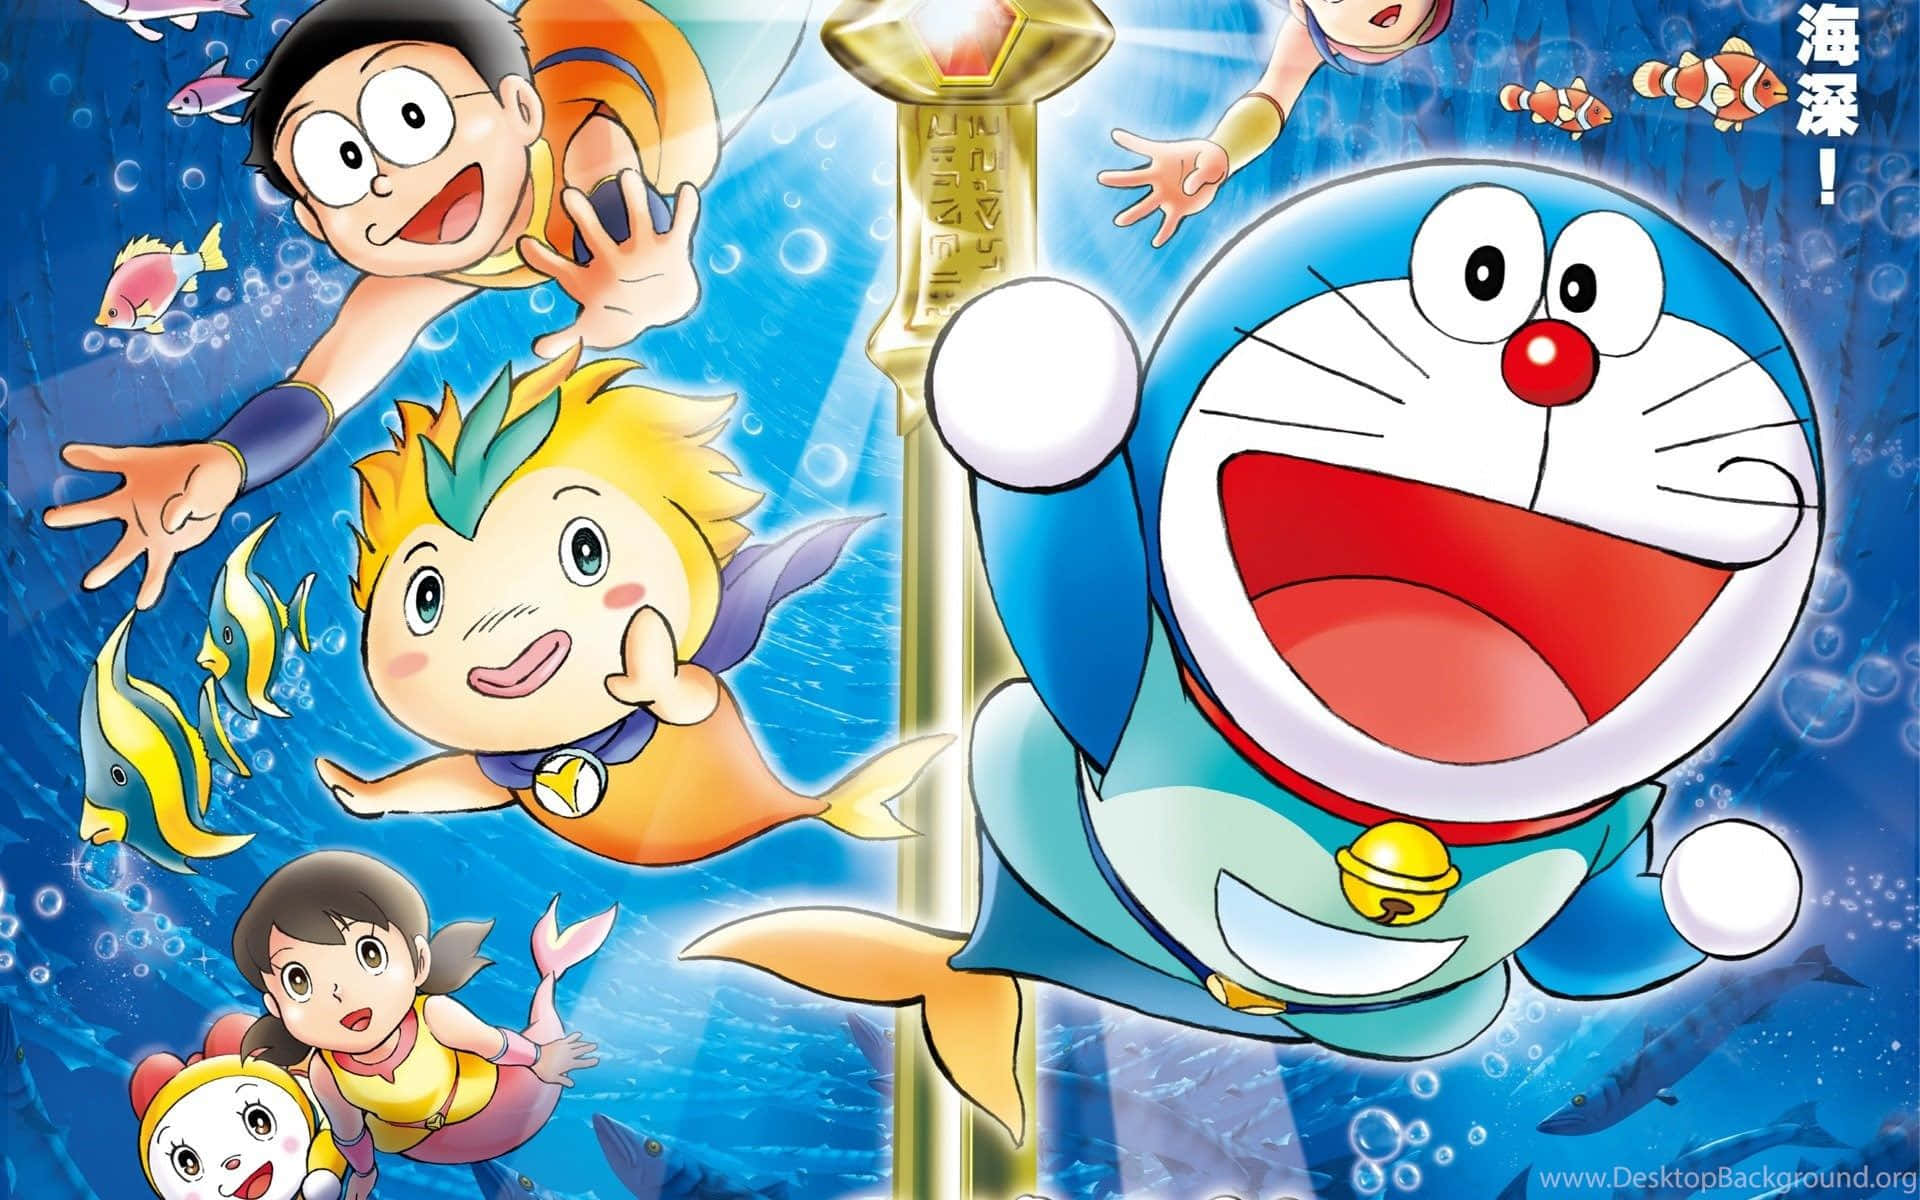 Fondode Doraemon